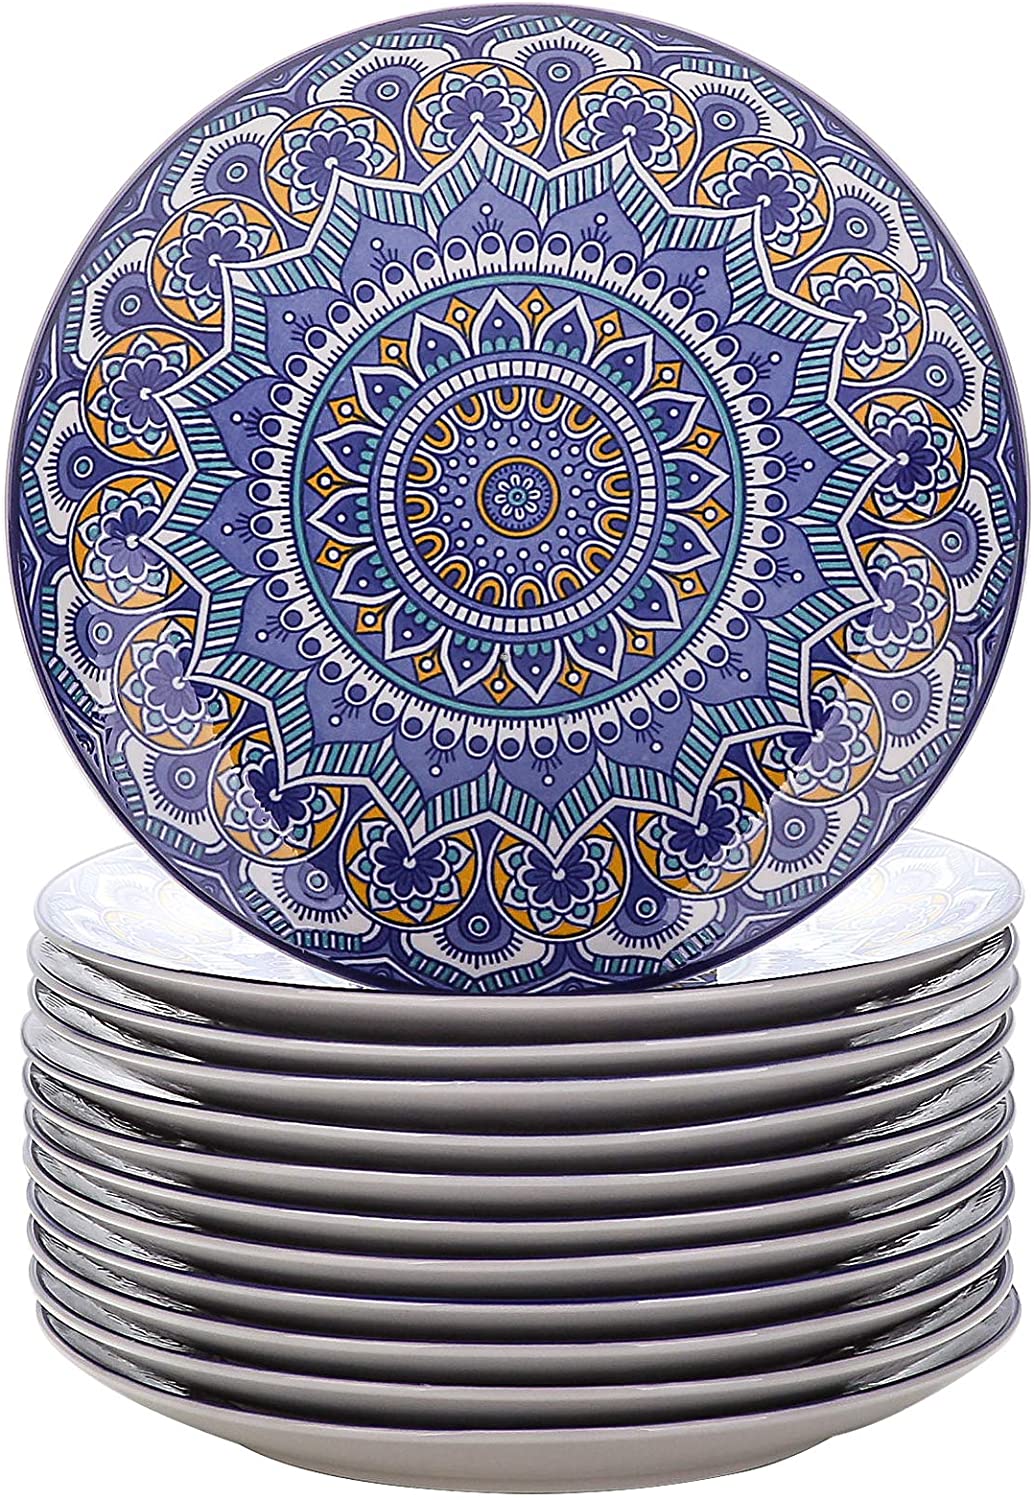 Vancasso Dinner Service Porcelain, Mandala Crockery Set